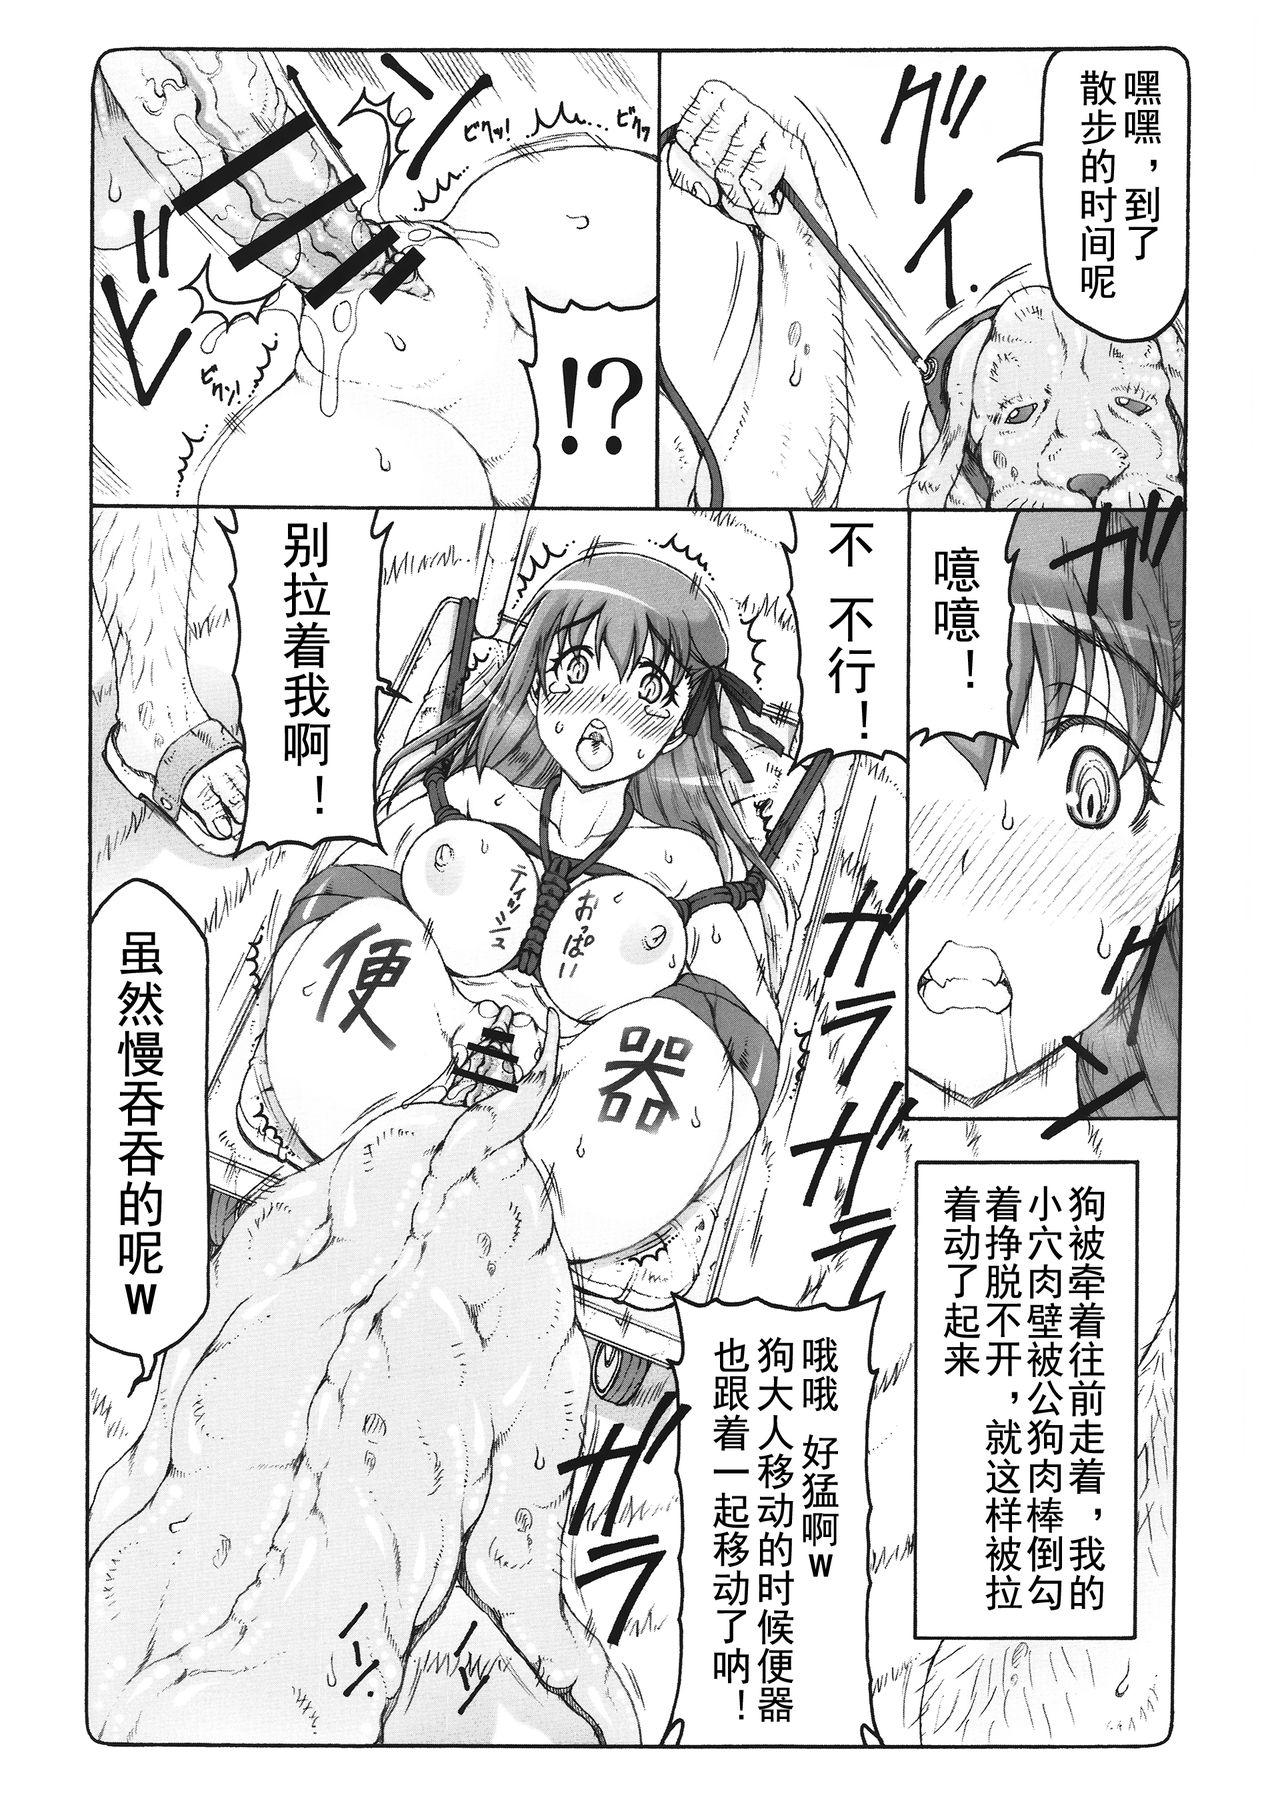 Naughty Kotori 14 - Fate stay night Casero - Page 8